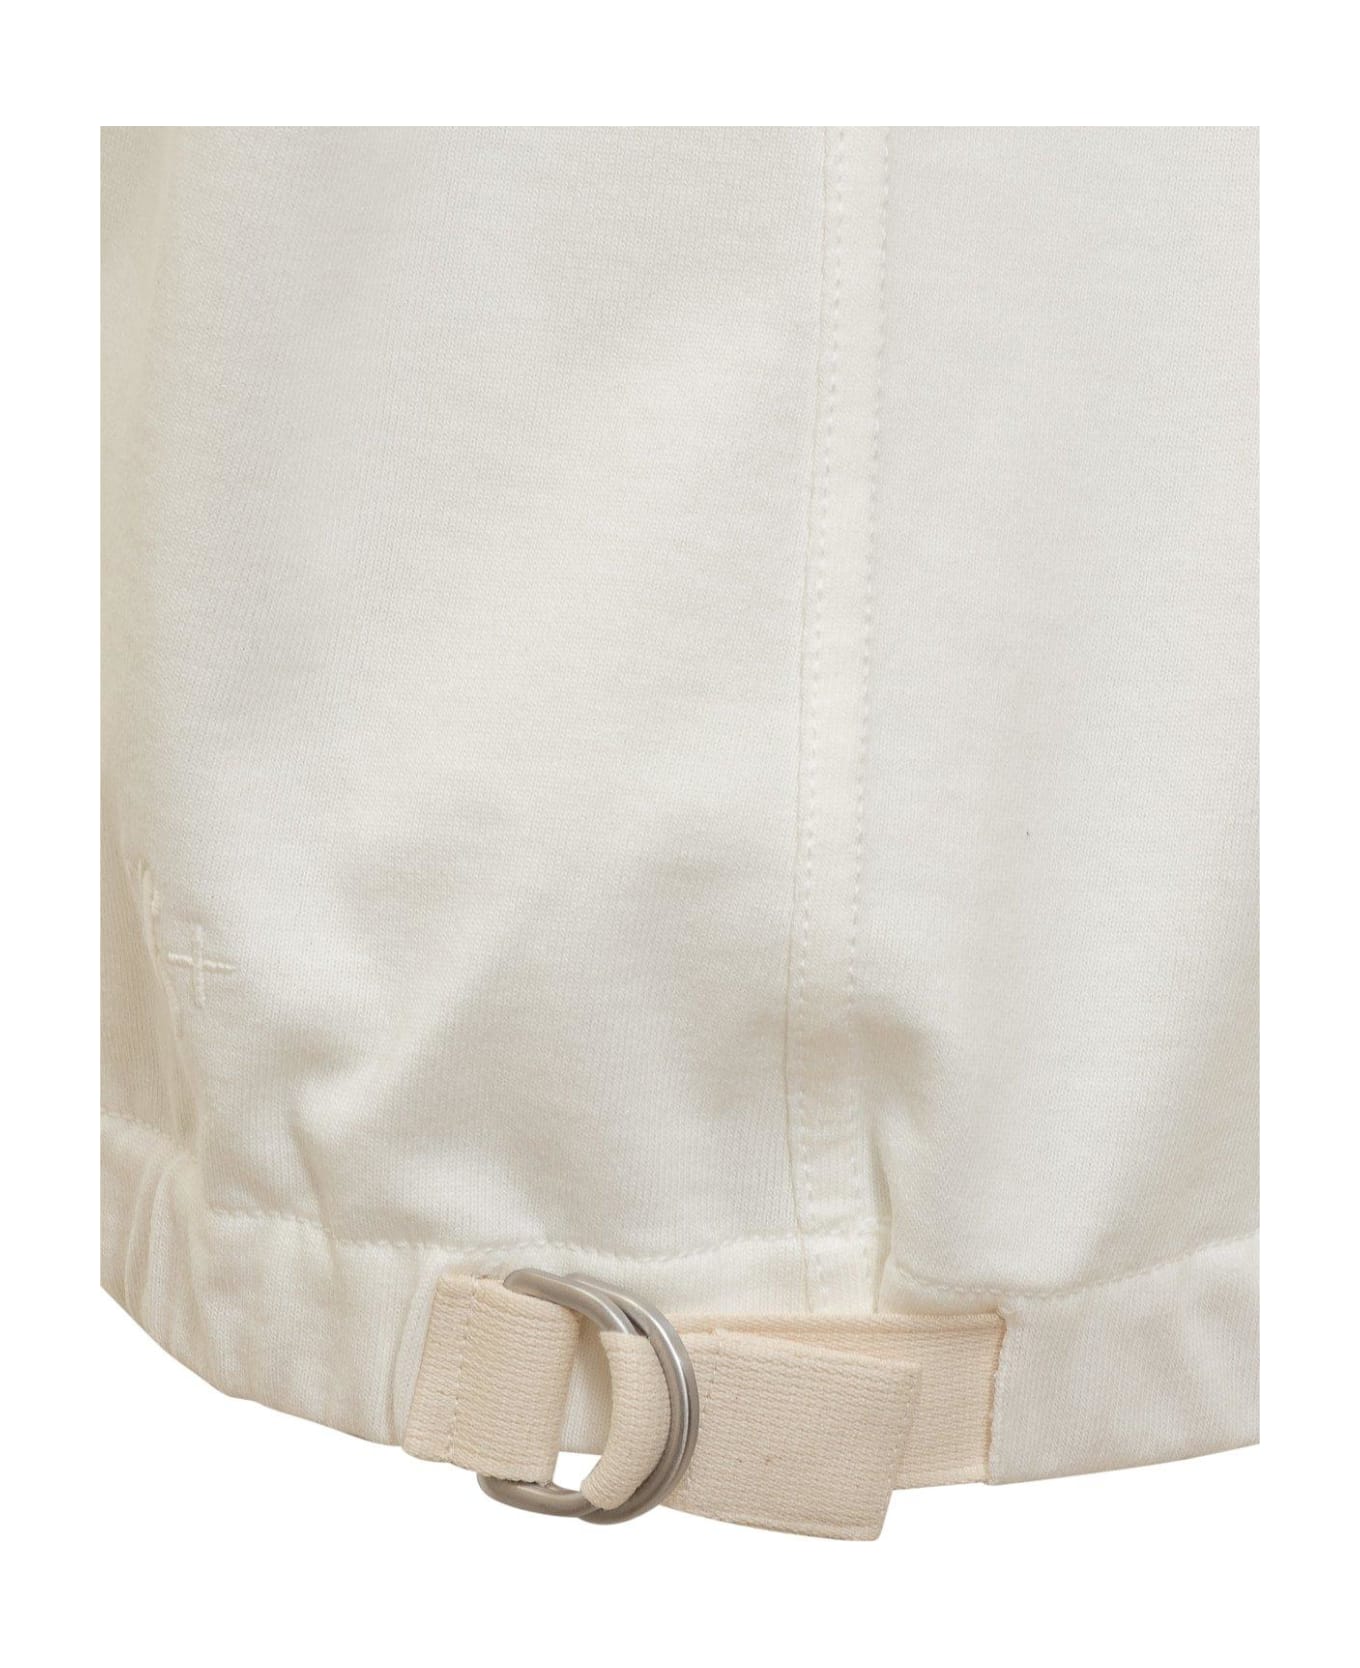 Jil Sander + Bow-detailed Short-sleeved Blouse - Bianco